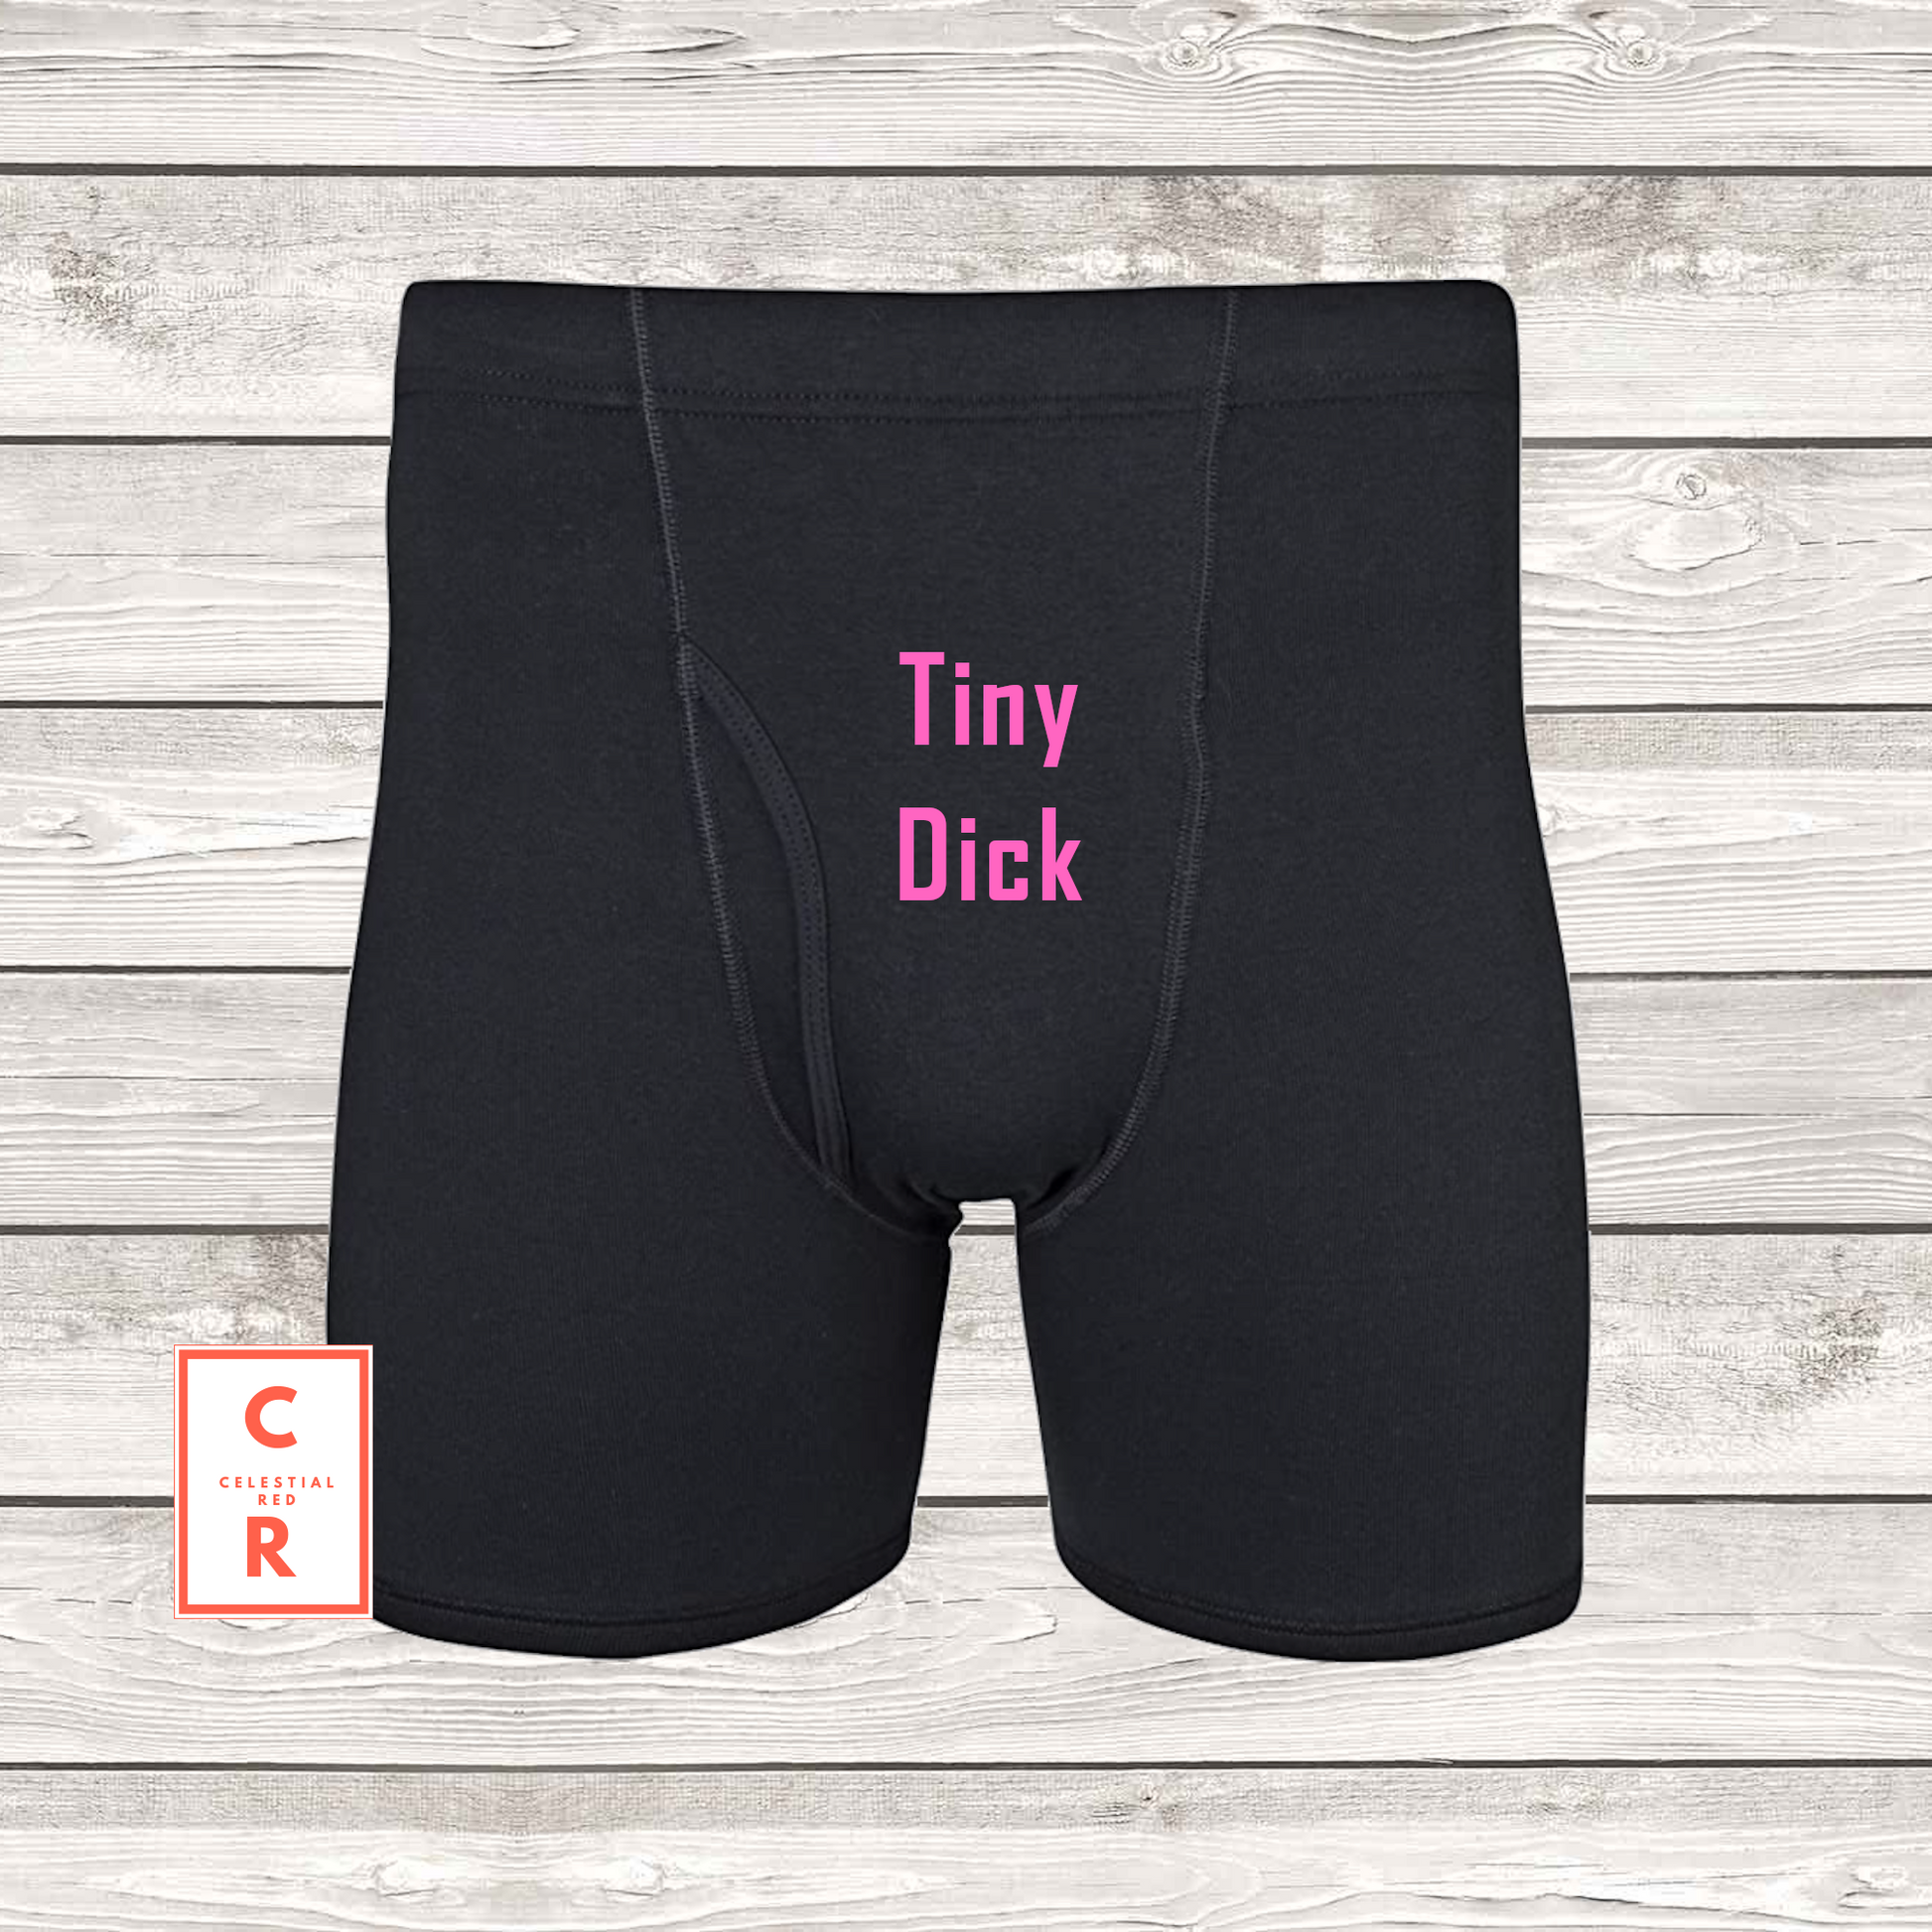 Tiny Dick sph Boxers